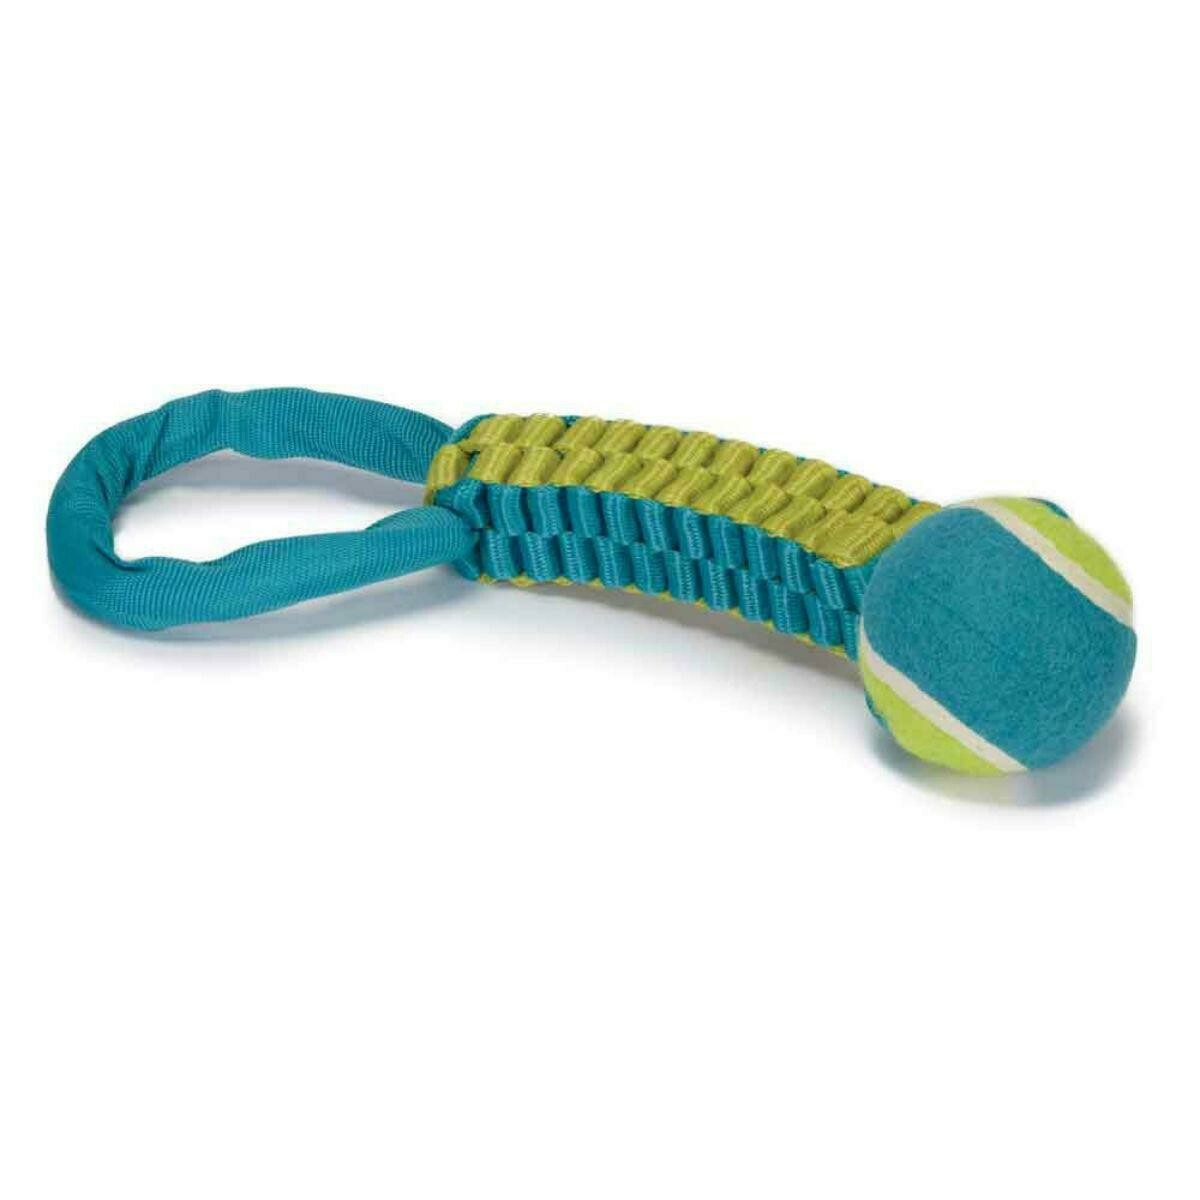 Chomper Braided Nylon Tennis Ball Tug Dog Toy - Turquoise